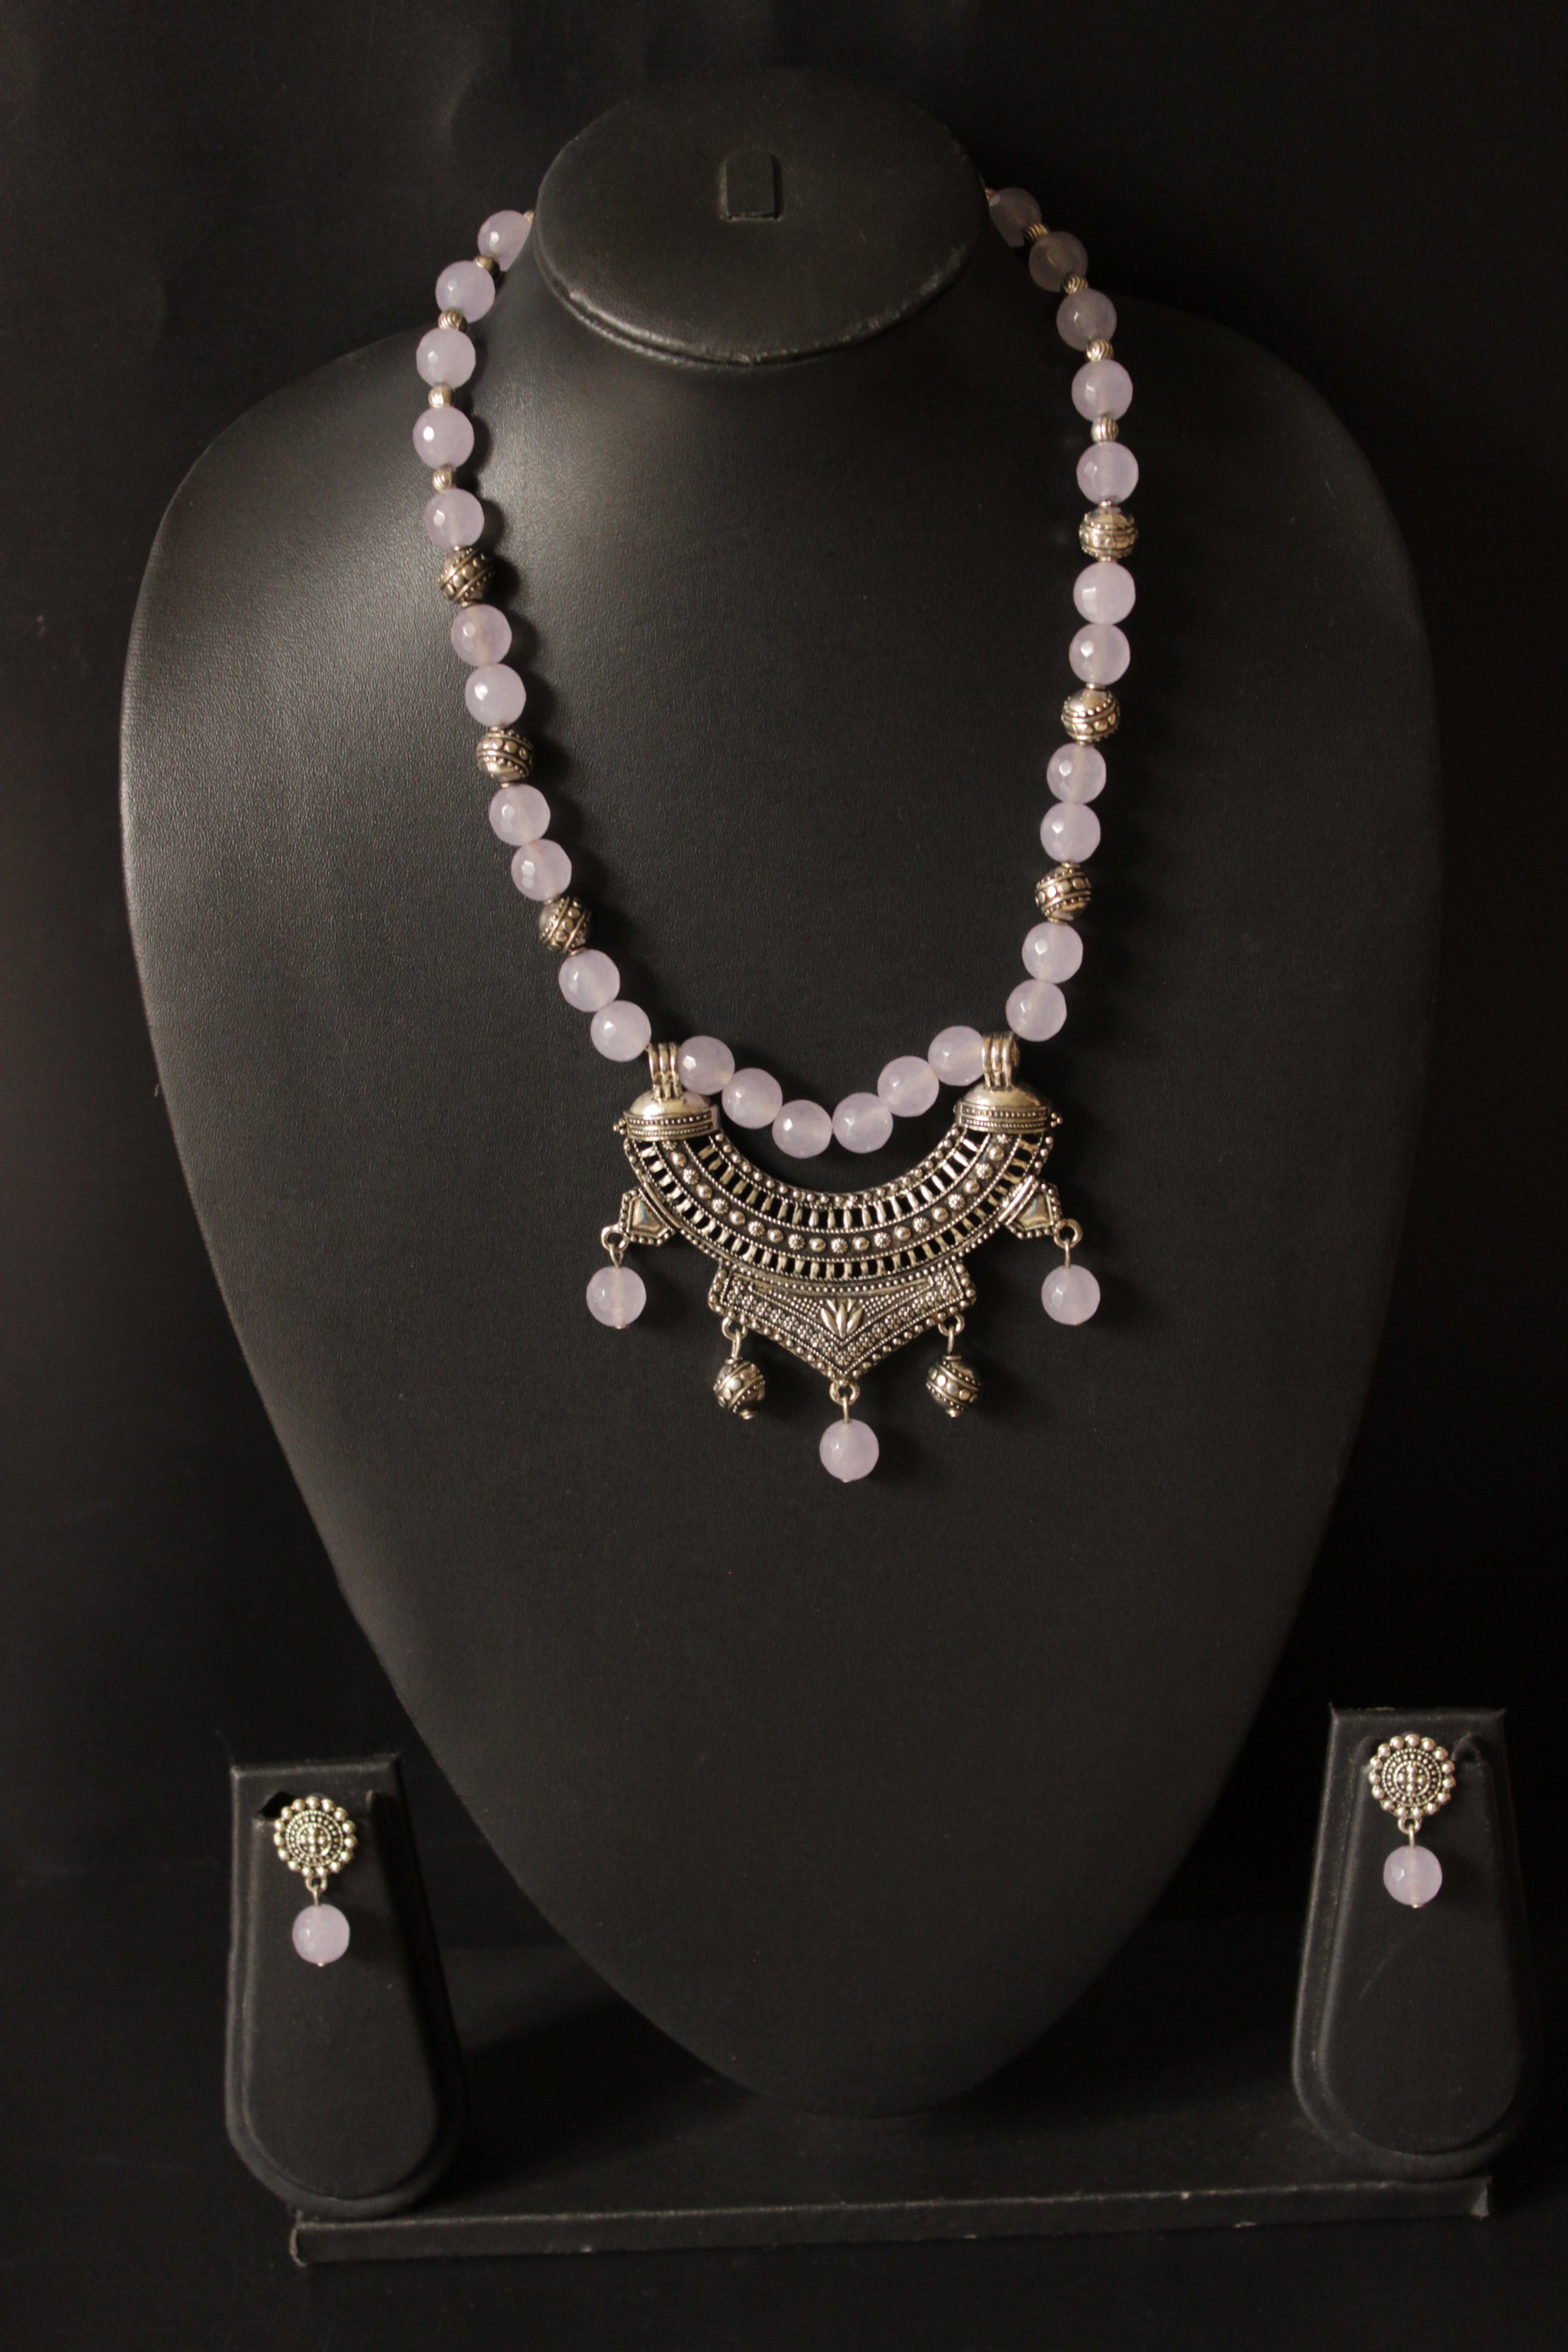 White Jade Beads and Elaborately Detailed Metal Pendant Necklace Set